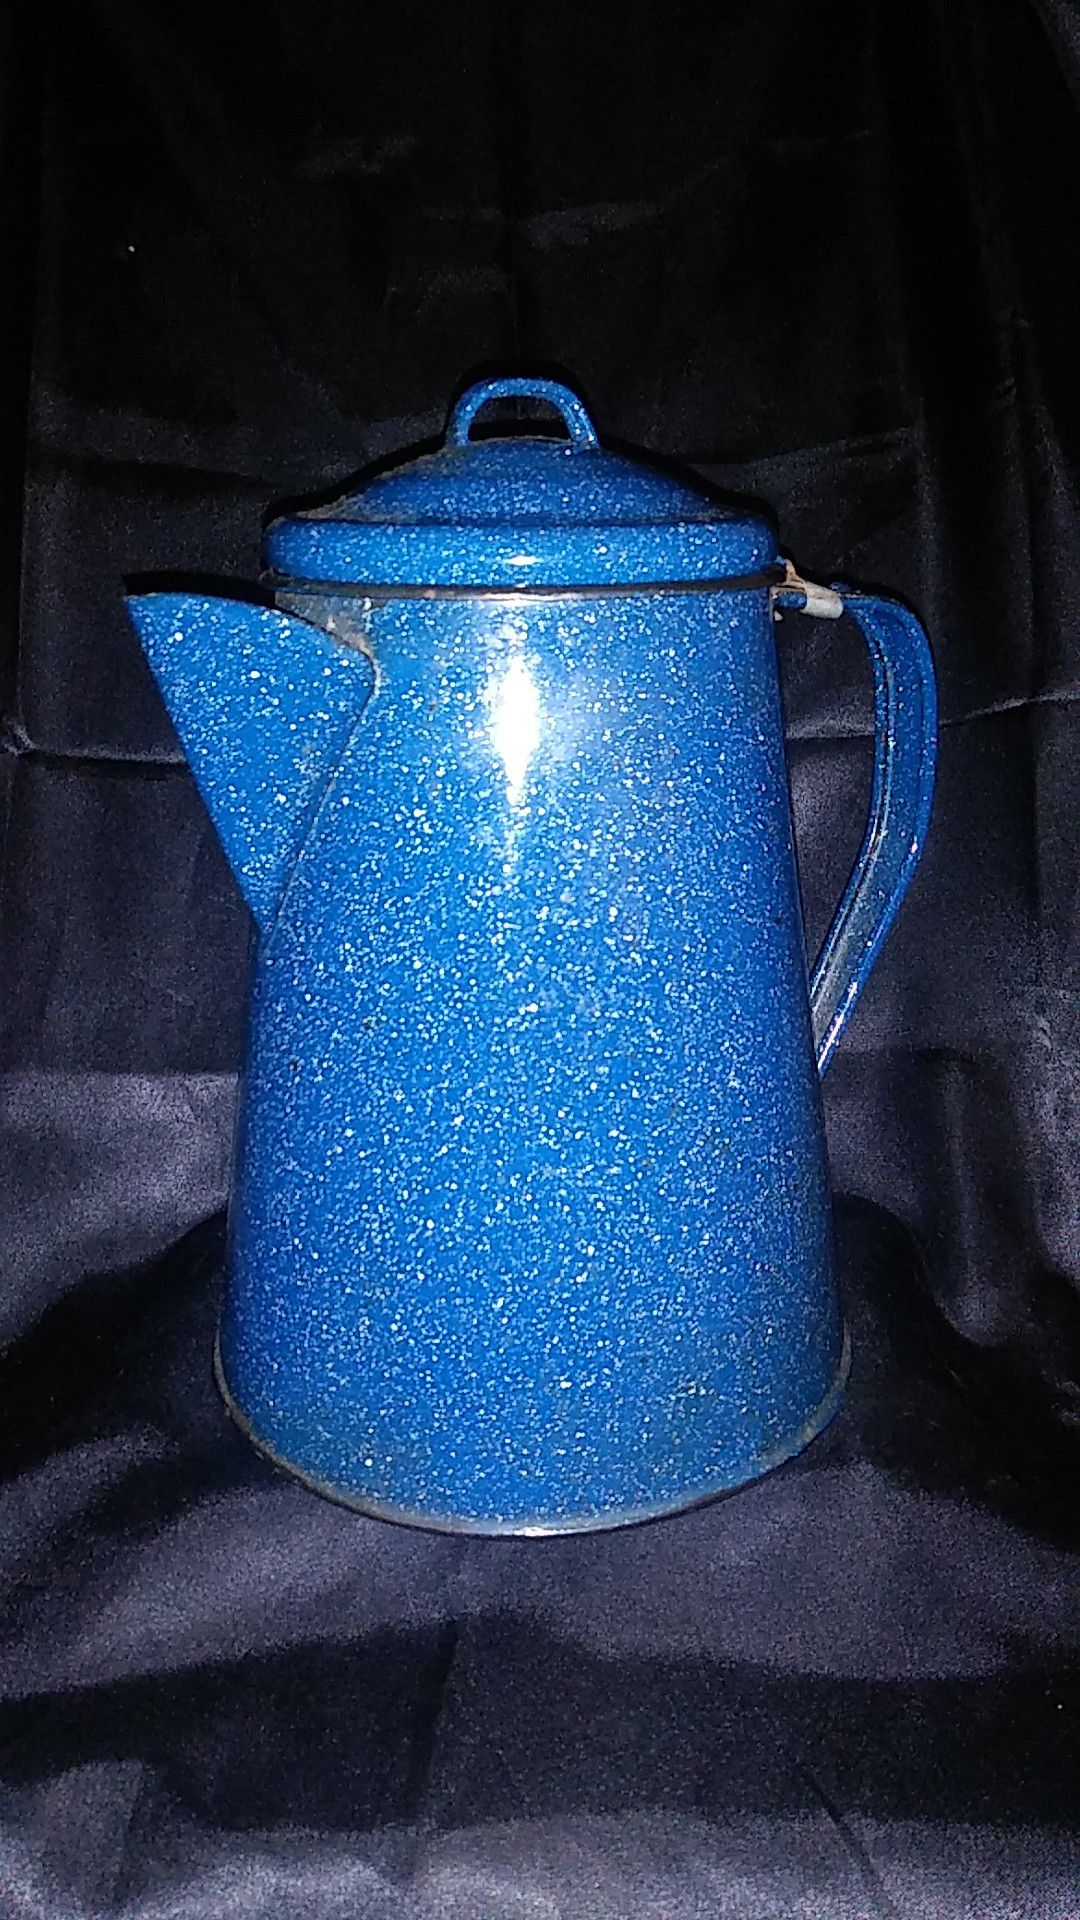 VTG ? Large 10" Blue White Speckled Coffee Pot Tea Kettle Farm House Decor